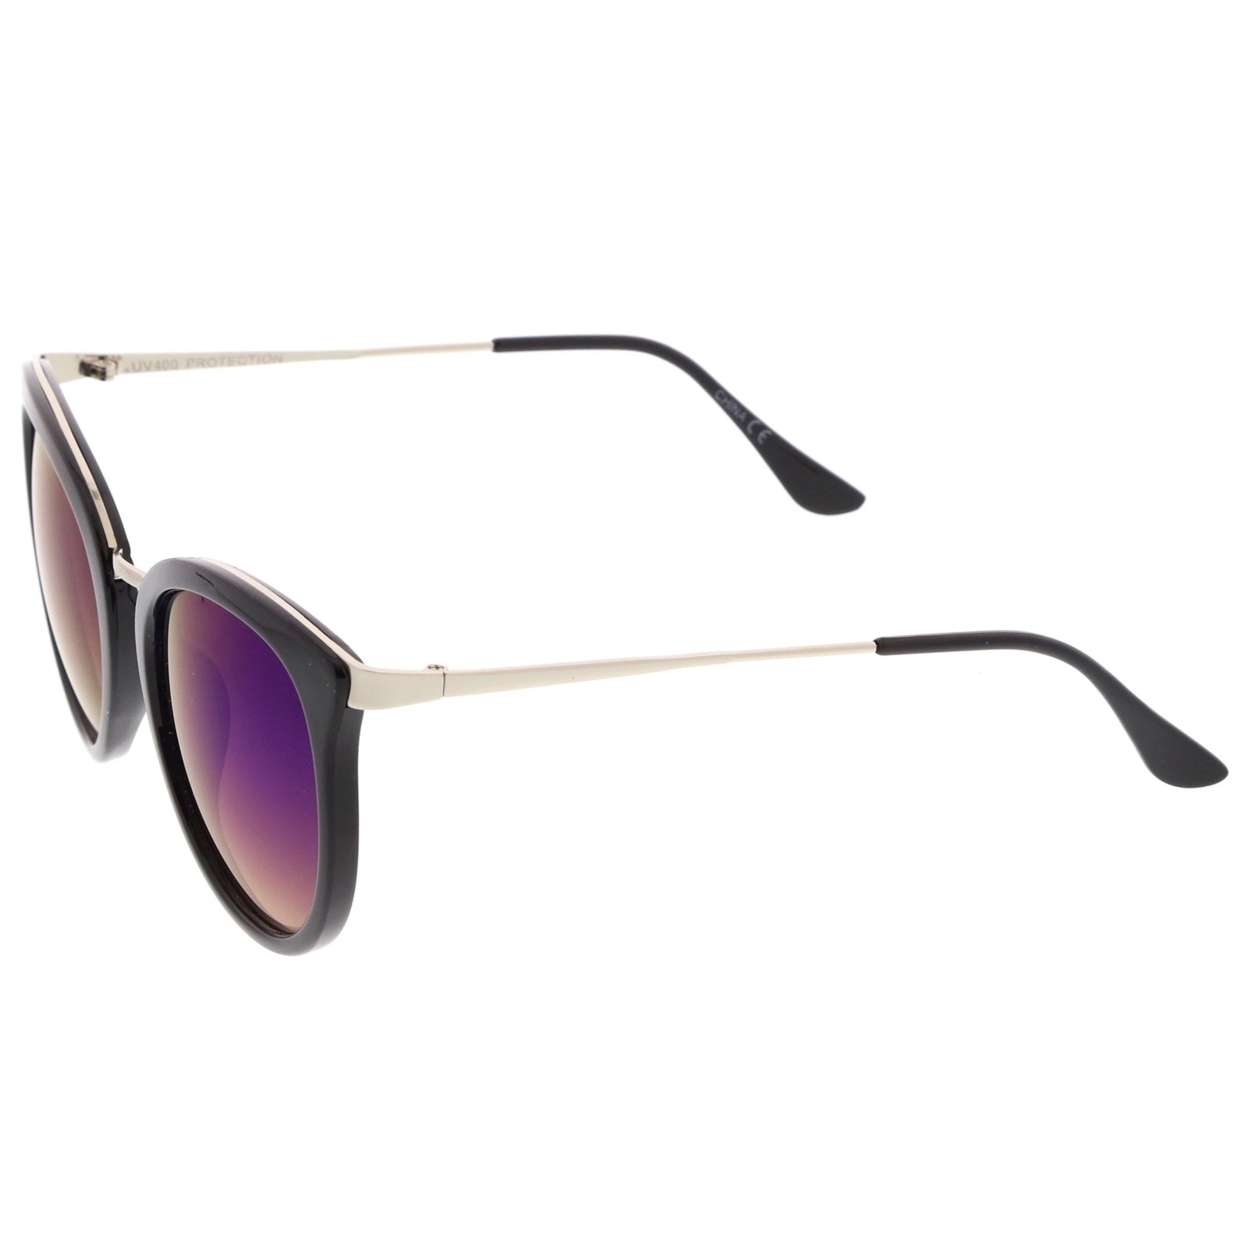 Modern Slim Metal Temple Colored Mirror Lens Cat Eye Sunglasses 54mm - Black-Silver / Blue Mirror